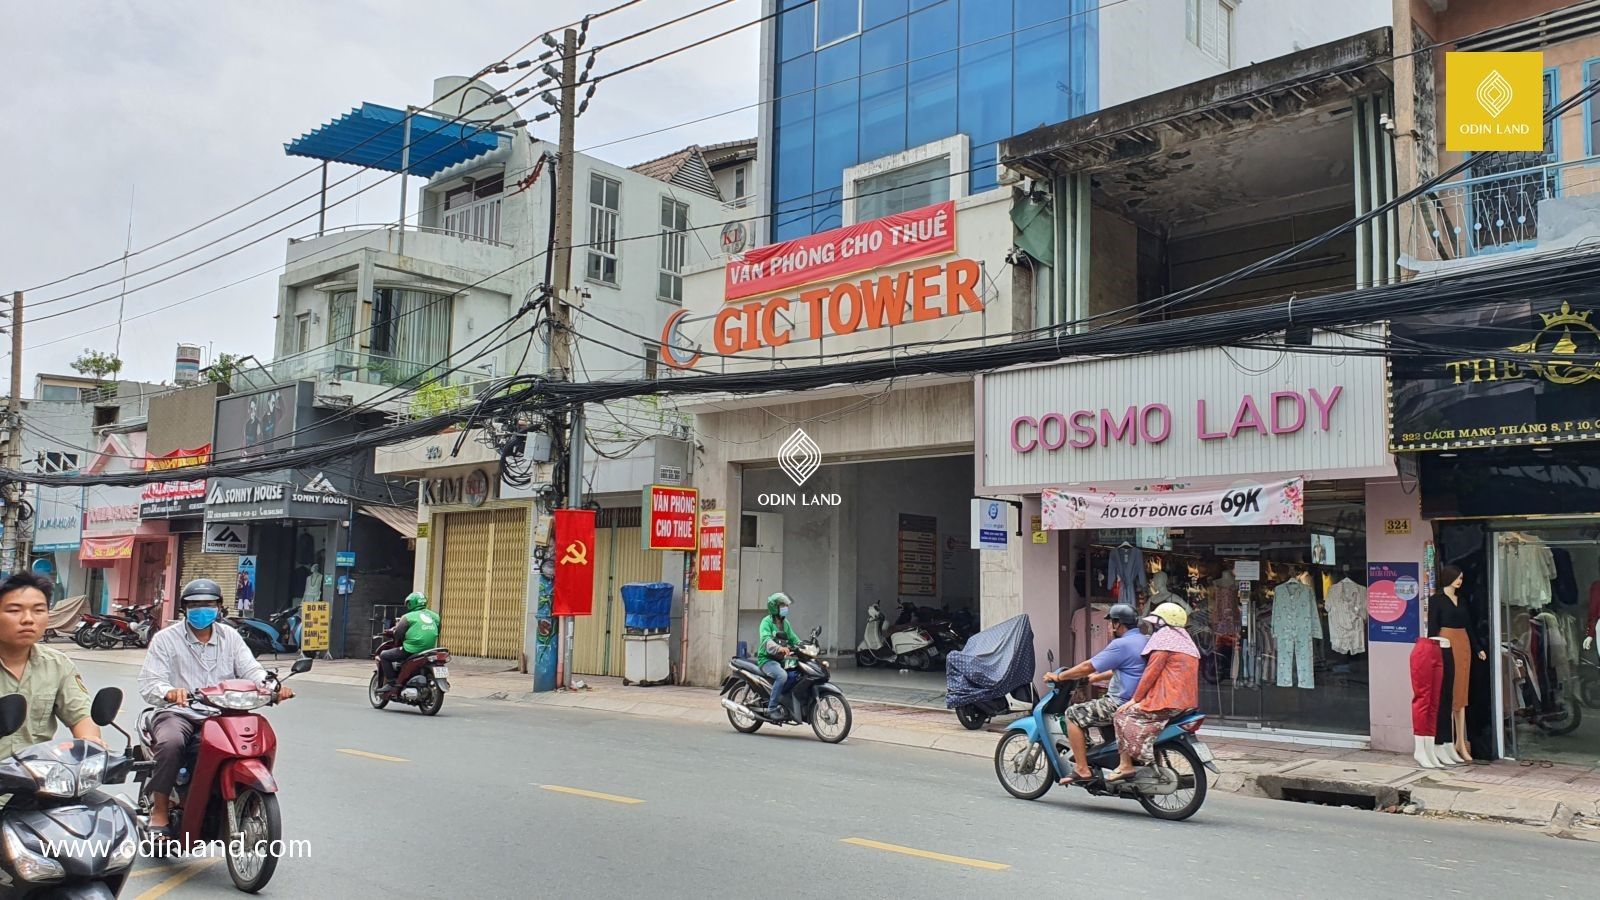 Van Phong Cho Thue Toa Nha Gic Tower Cmt8 3